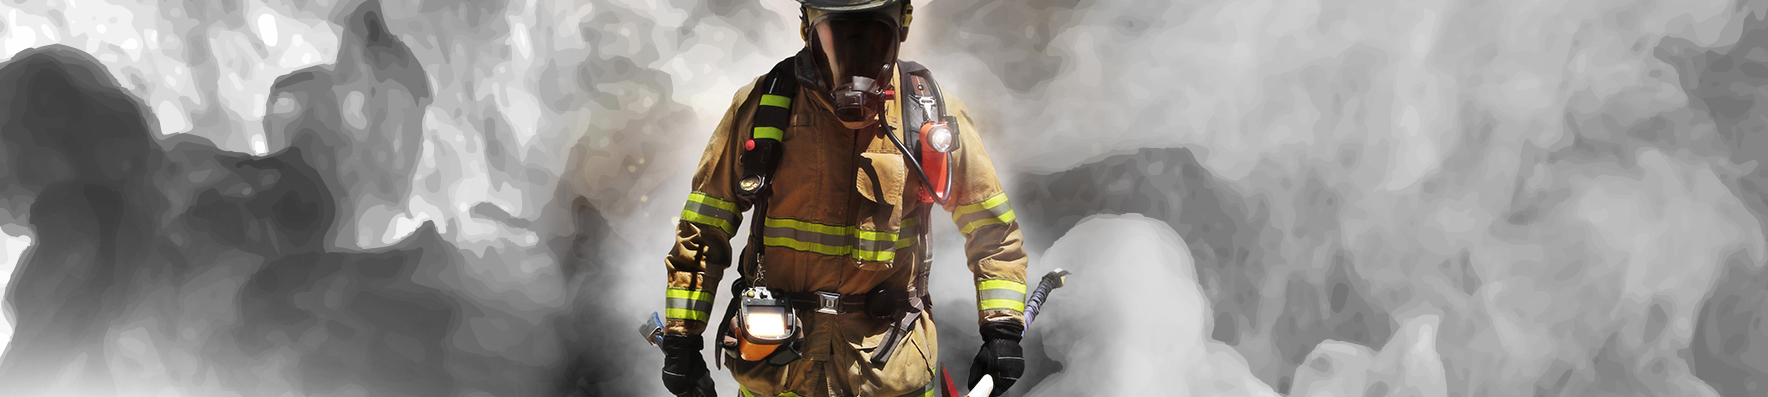 Firefighter-Cancer-Website-Header.jpg